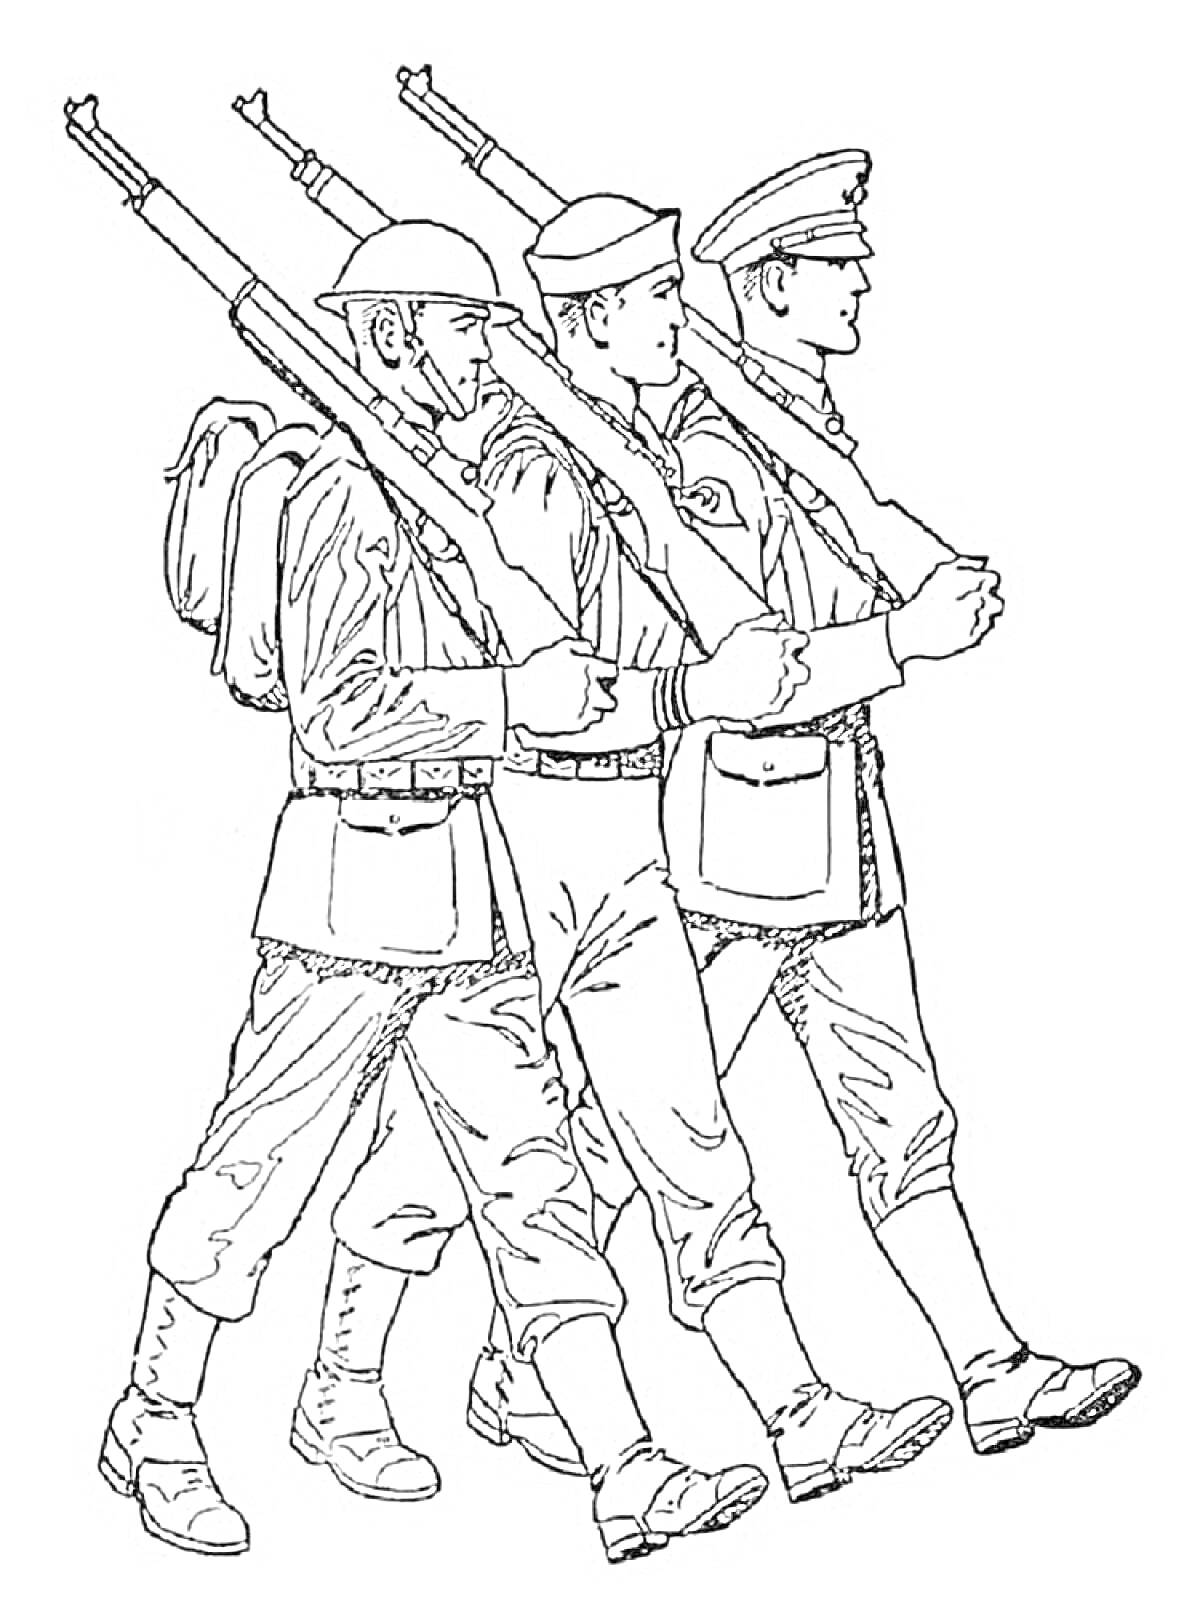 Раскраска Три шагающих солдата с винтовками на плечах